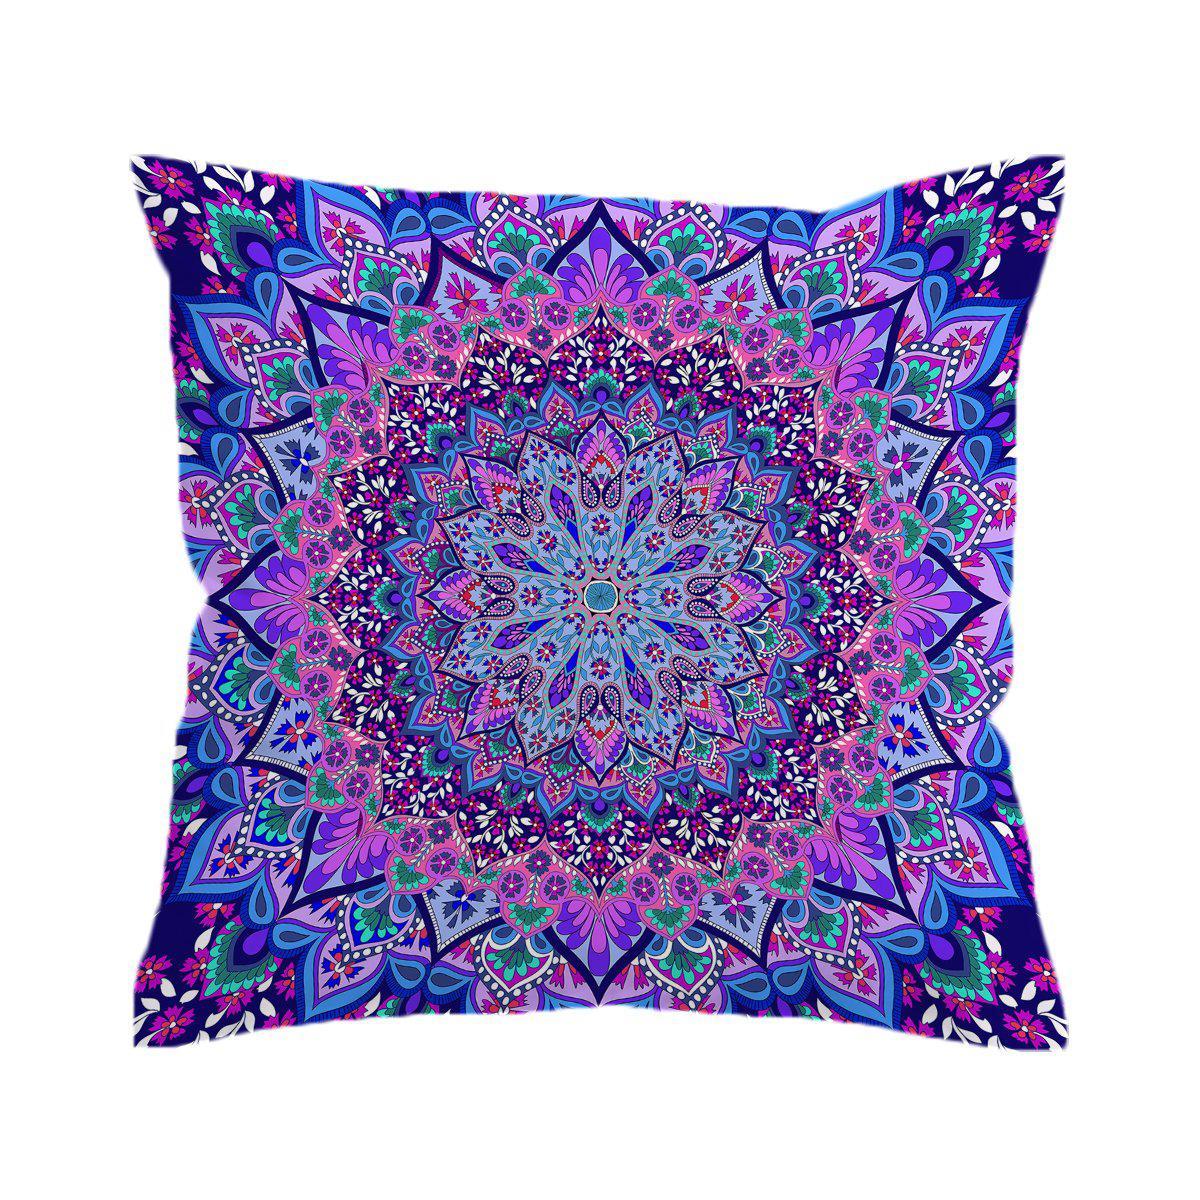 Cosmic Bohemian Pillow Cover